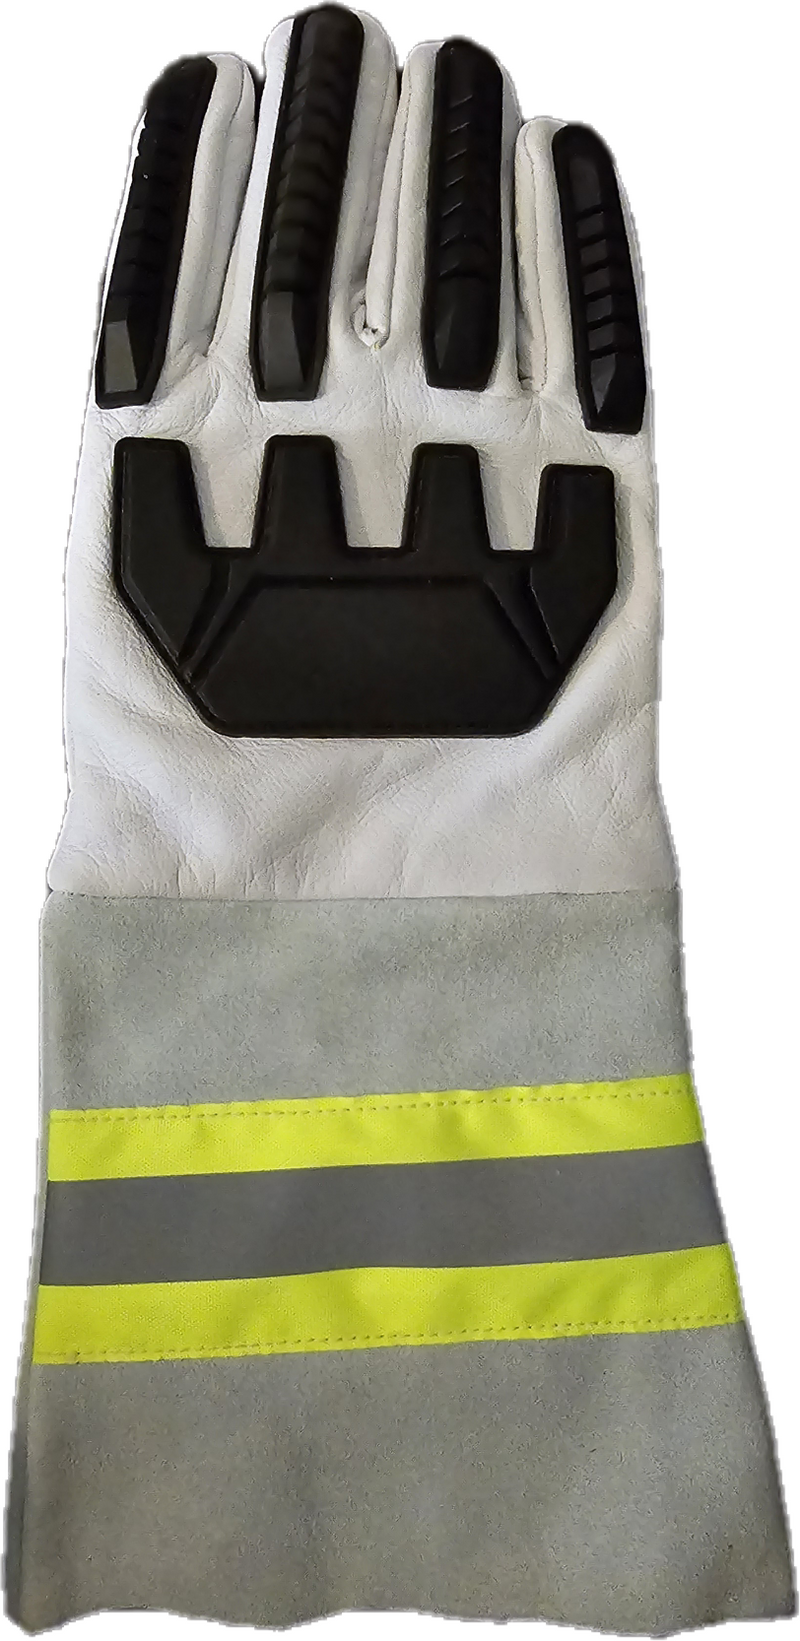 TPR impact gloves